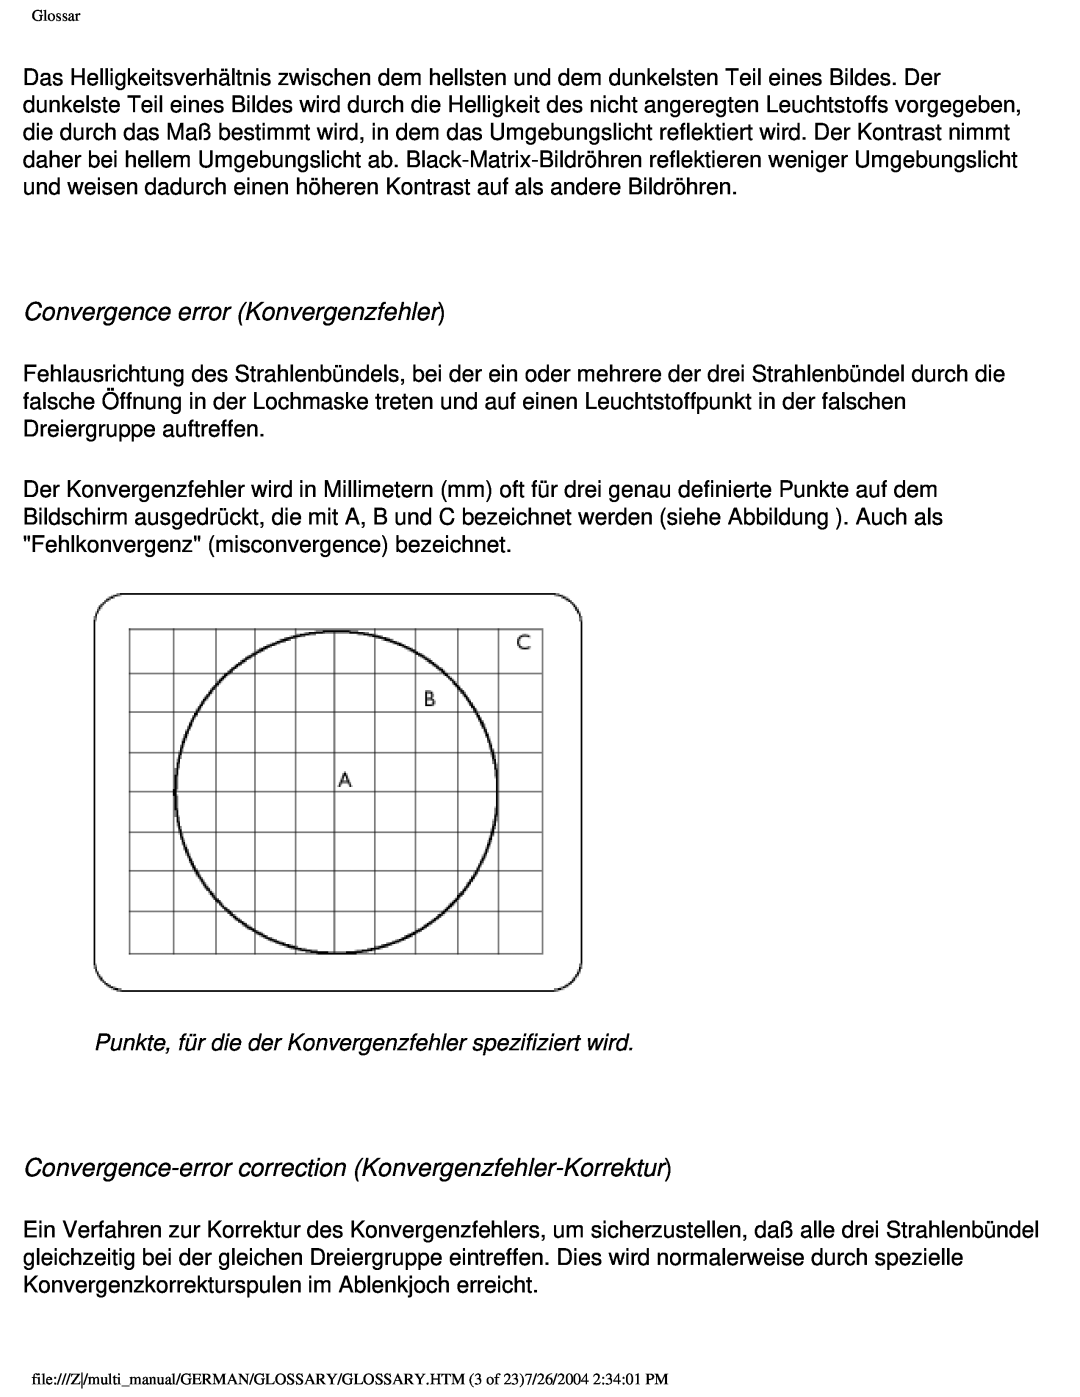 Philips 107X2 user manual Convergence error Konvergenzfehler, Convergence-error correction Konvergenzfehler-Korrektur 